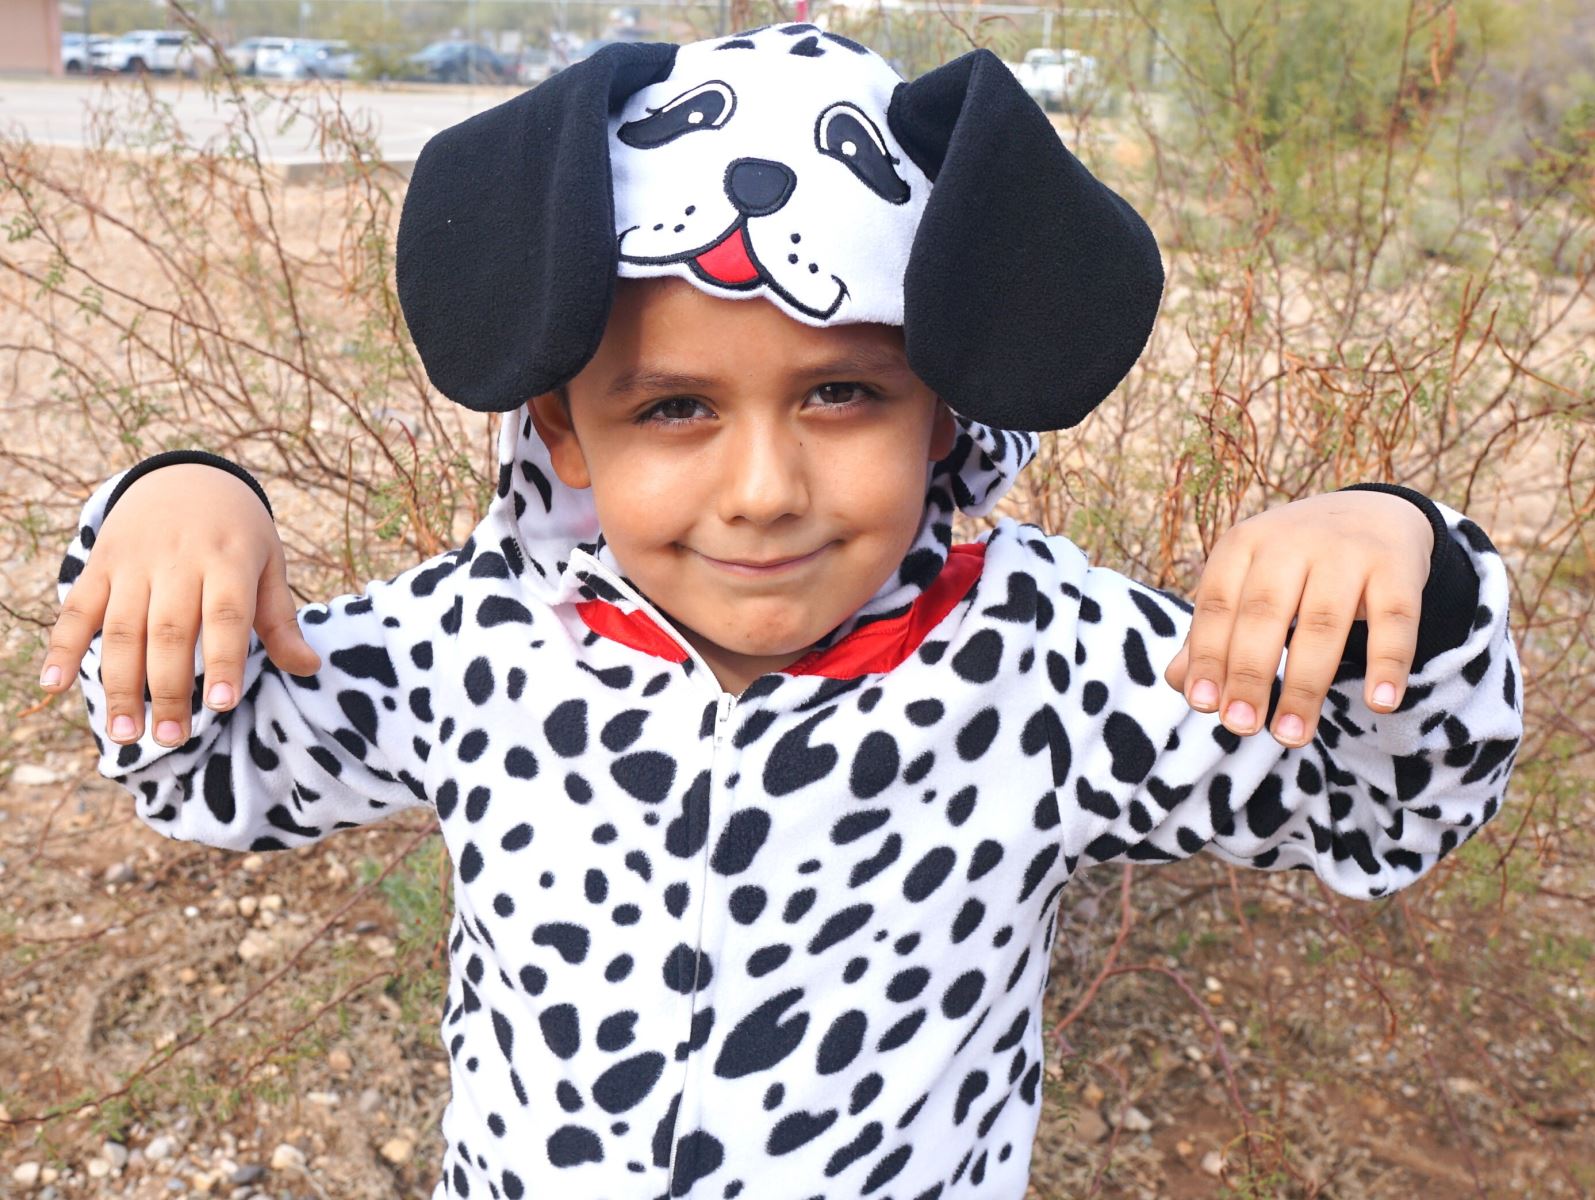 A boy poses as a Dalmatian puppy